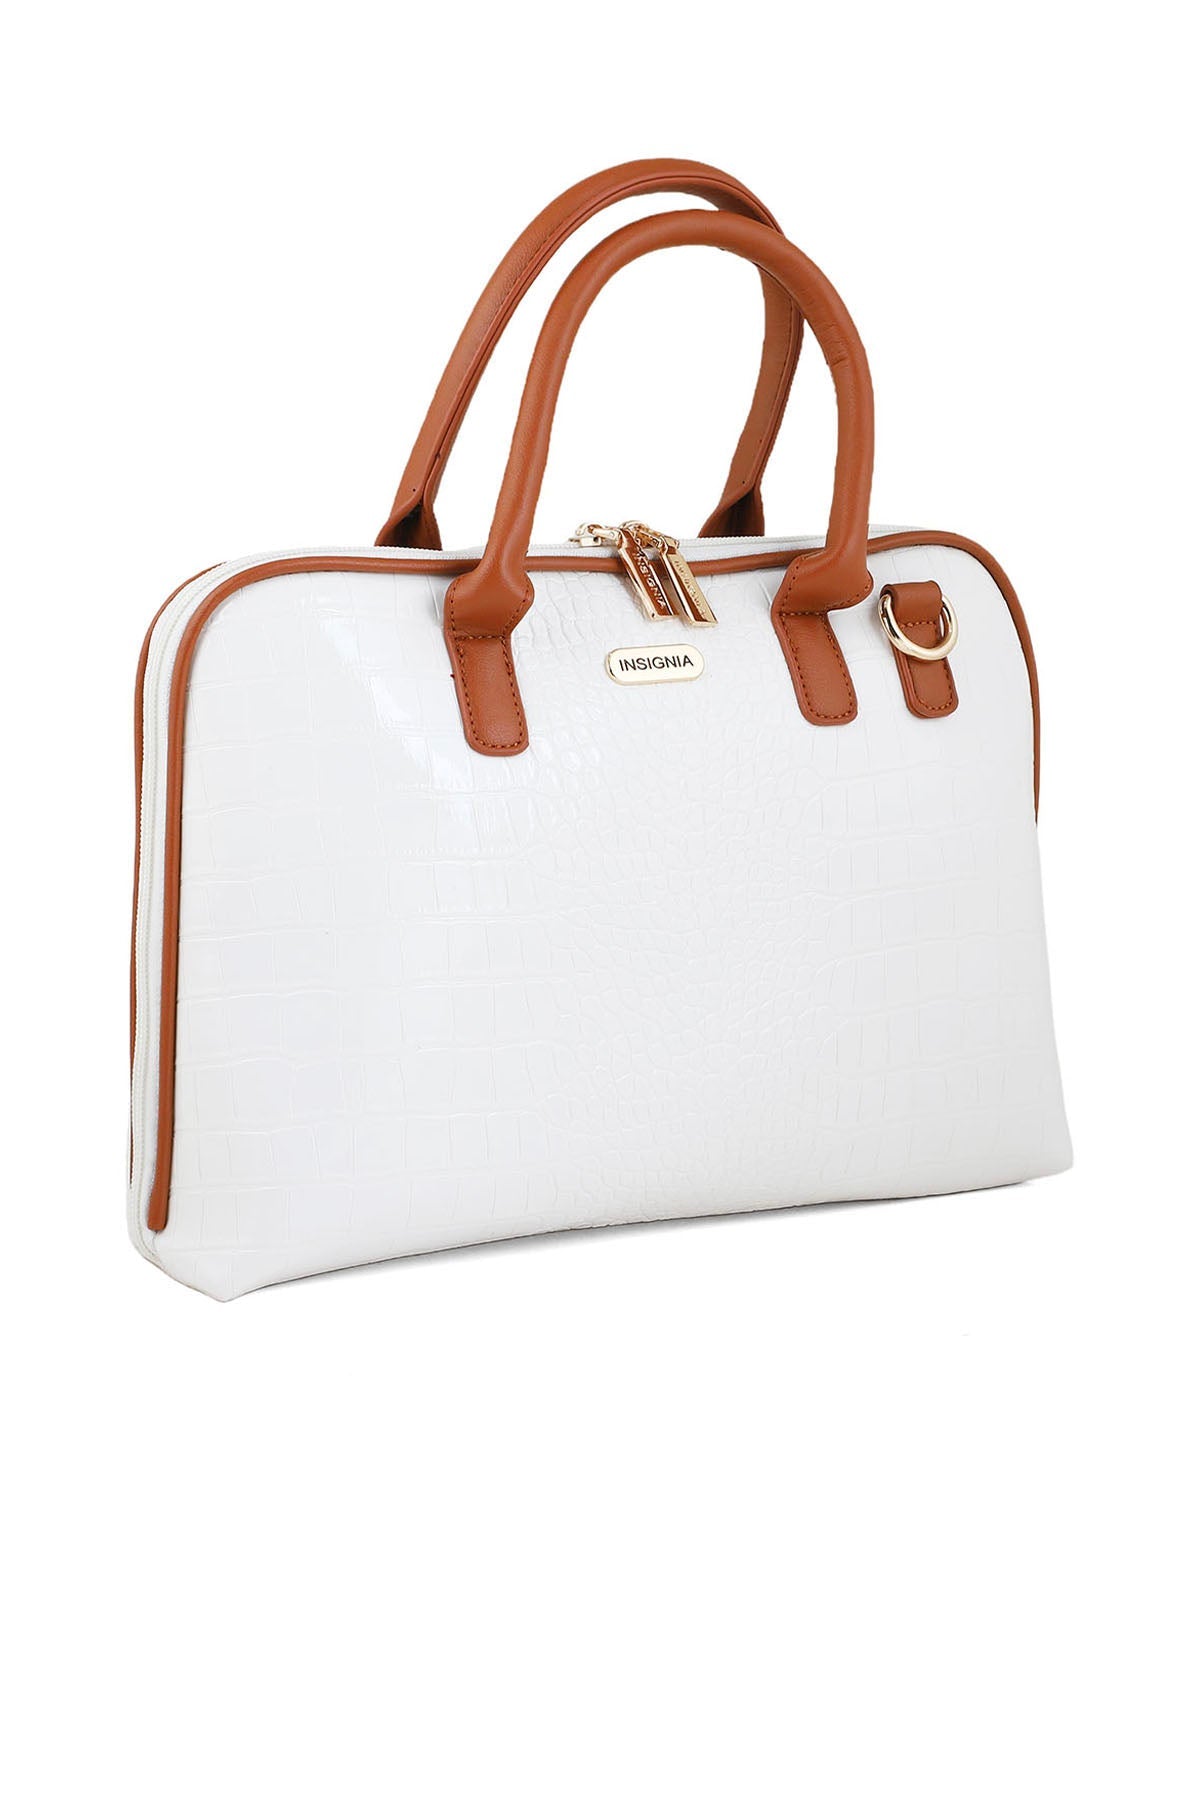 Top Handle Hand Bags B15046-Brown